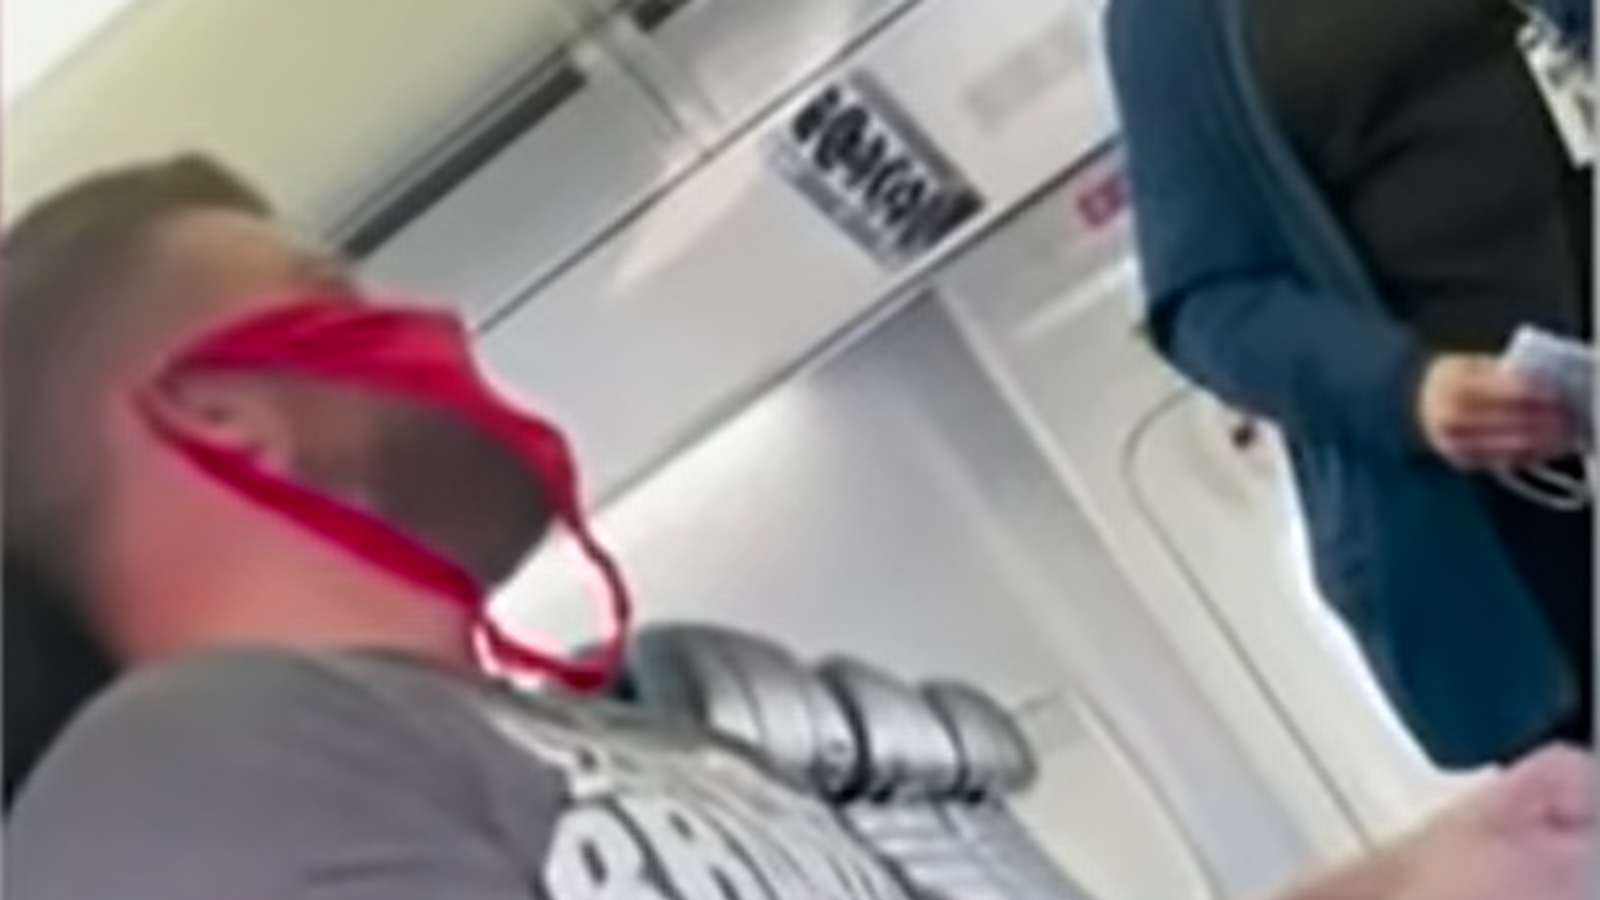 Man kicked off flight for wearing women's underwear as face mask, US News